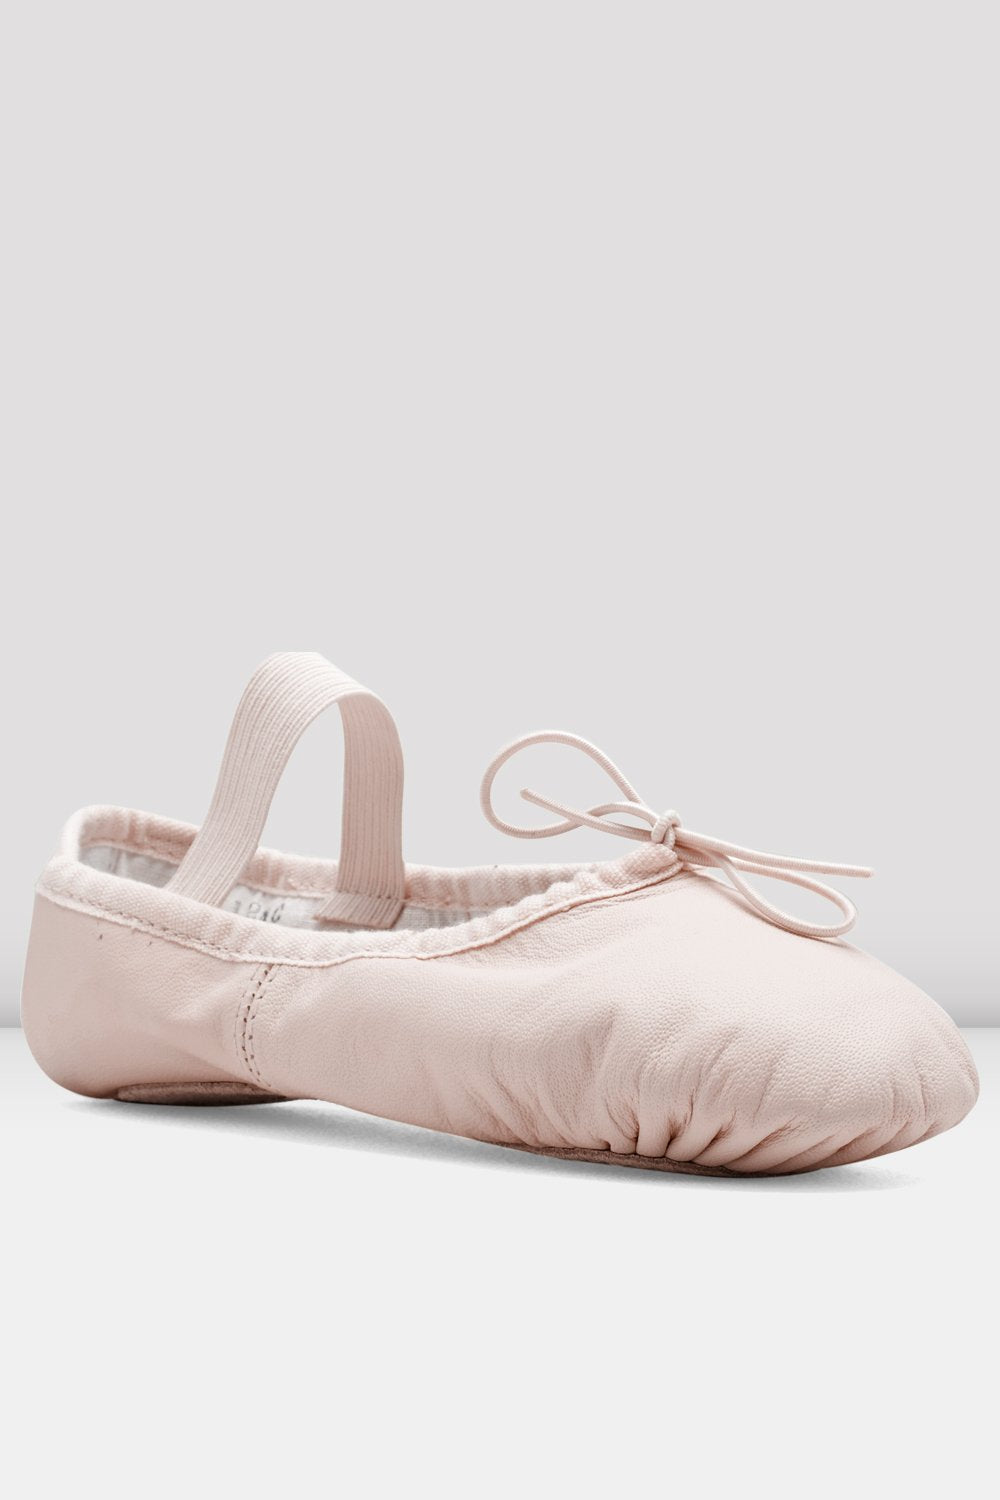 Ladies Dansoft Leather Ballet Shoes, Theatrical Pink – BLOCH Dance US